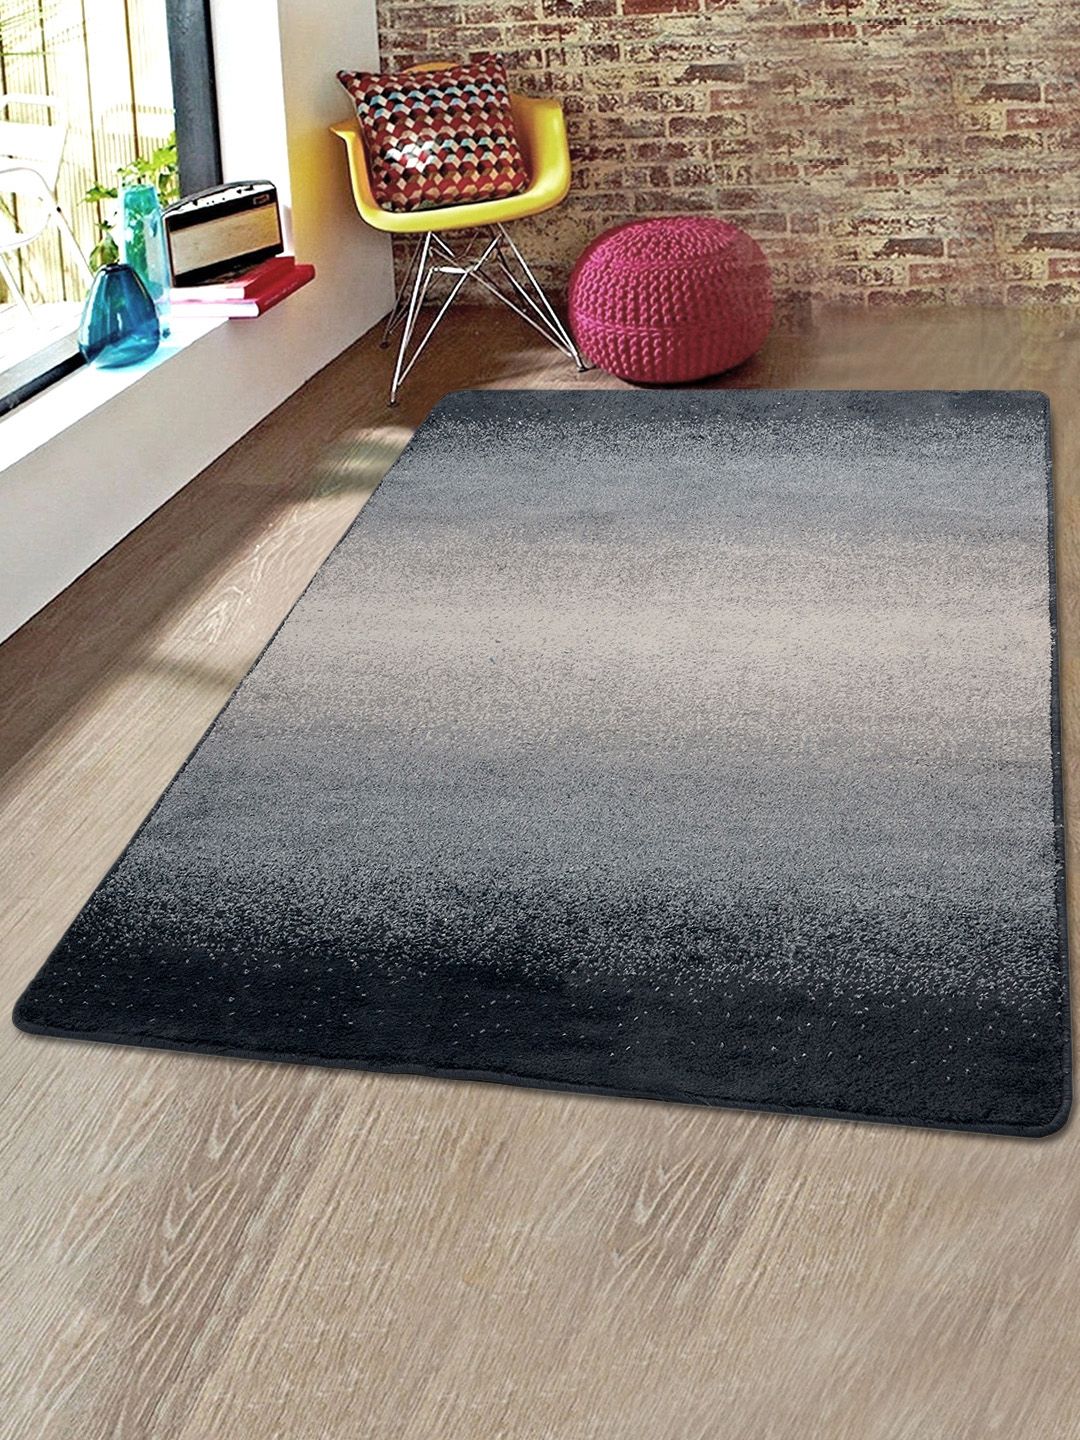 Saral Home Grey & Black Colourblocked Microfiber Anti-Skid Carpet Price in India